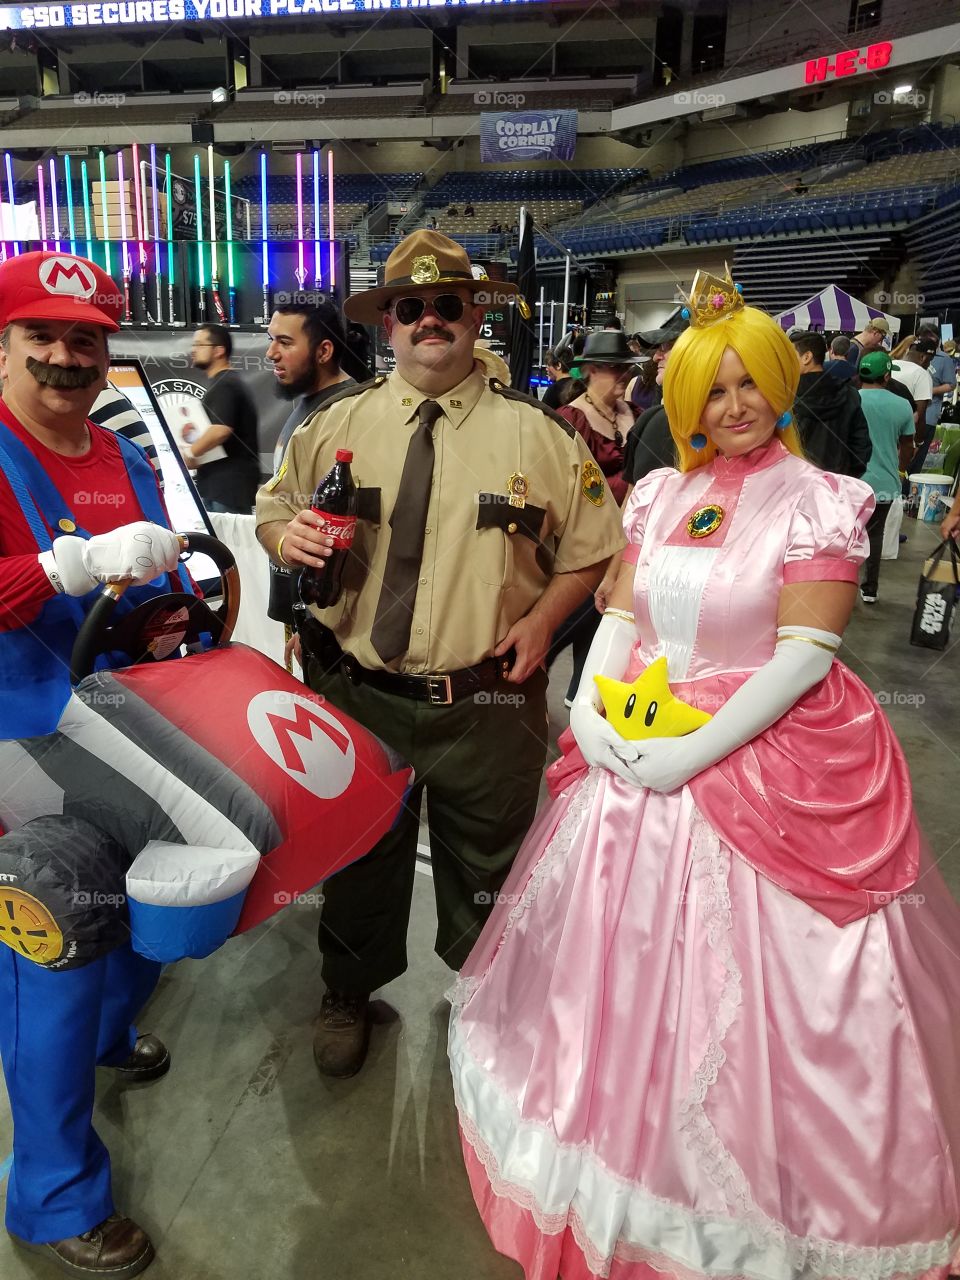 Mario, Princess Peach and Officer Favre